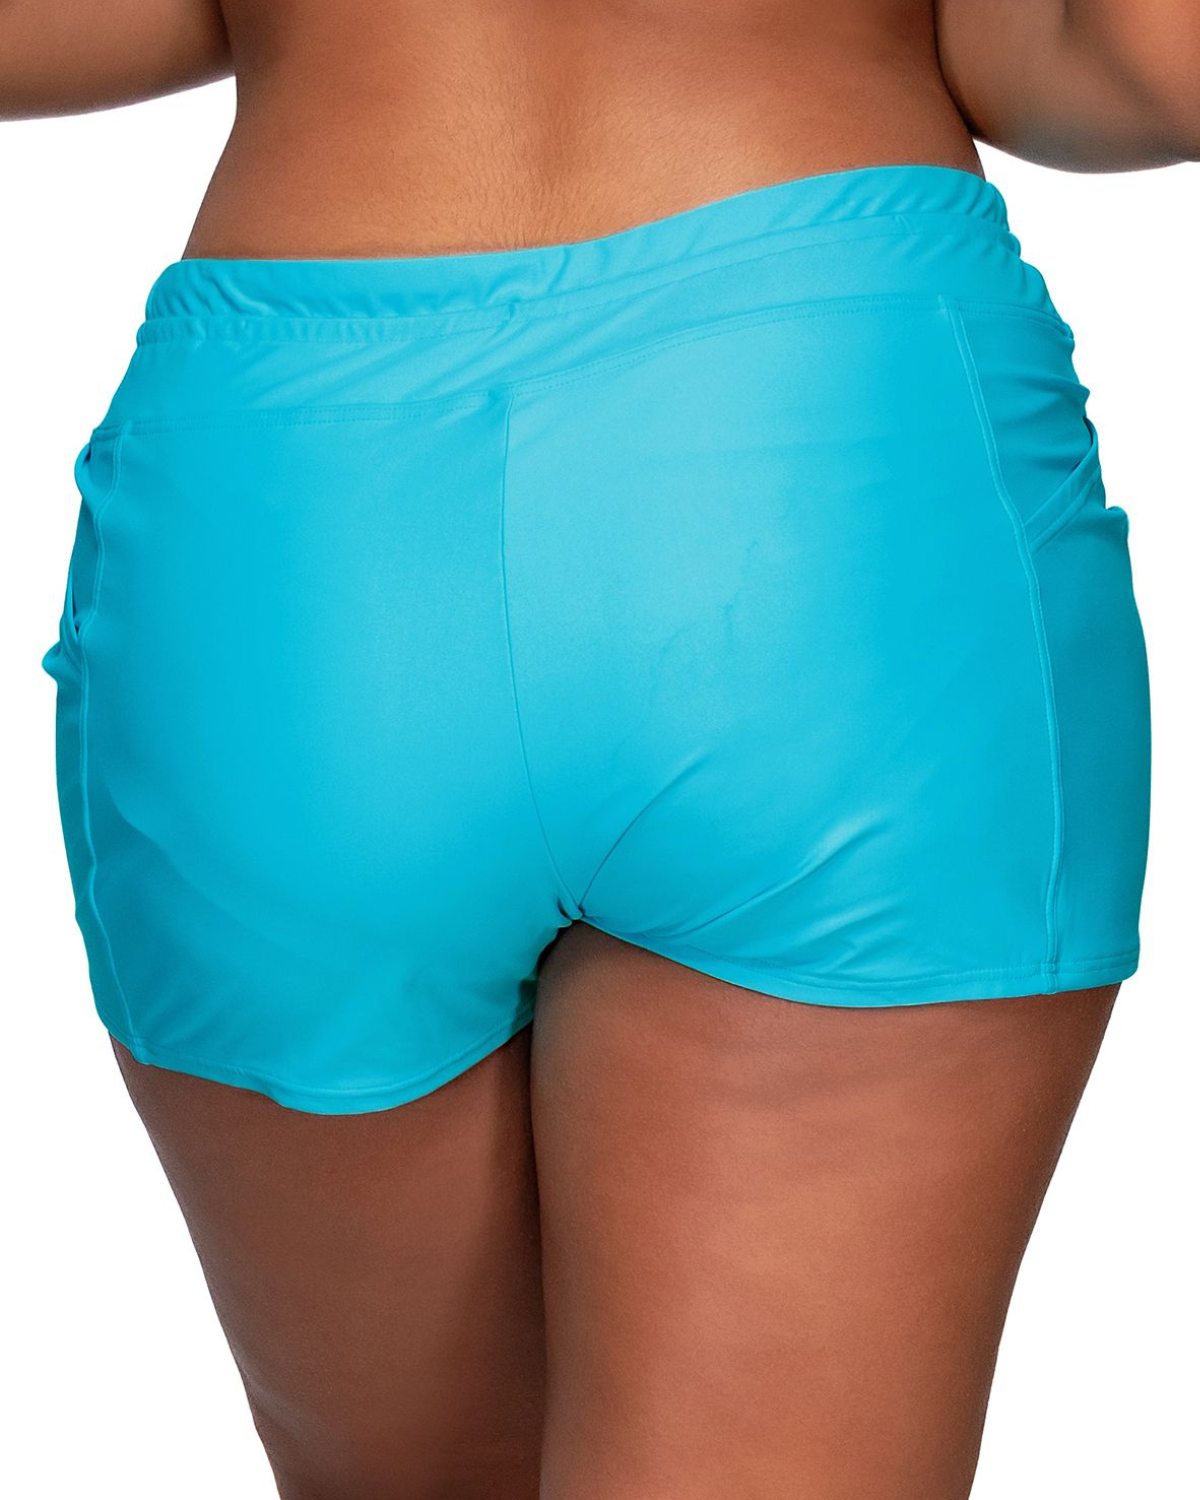 Model wearing a swim short with side pocket in blue